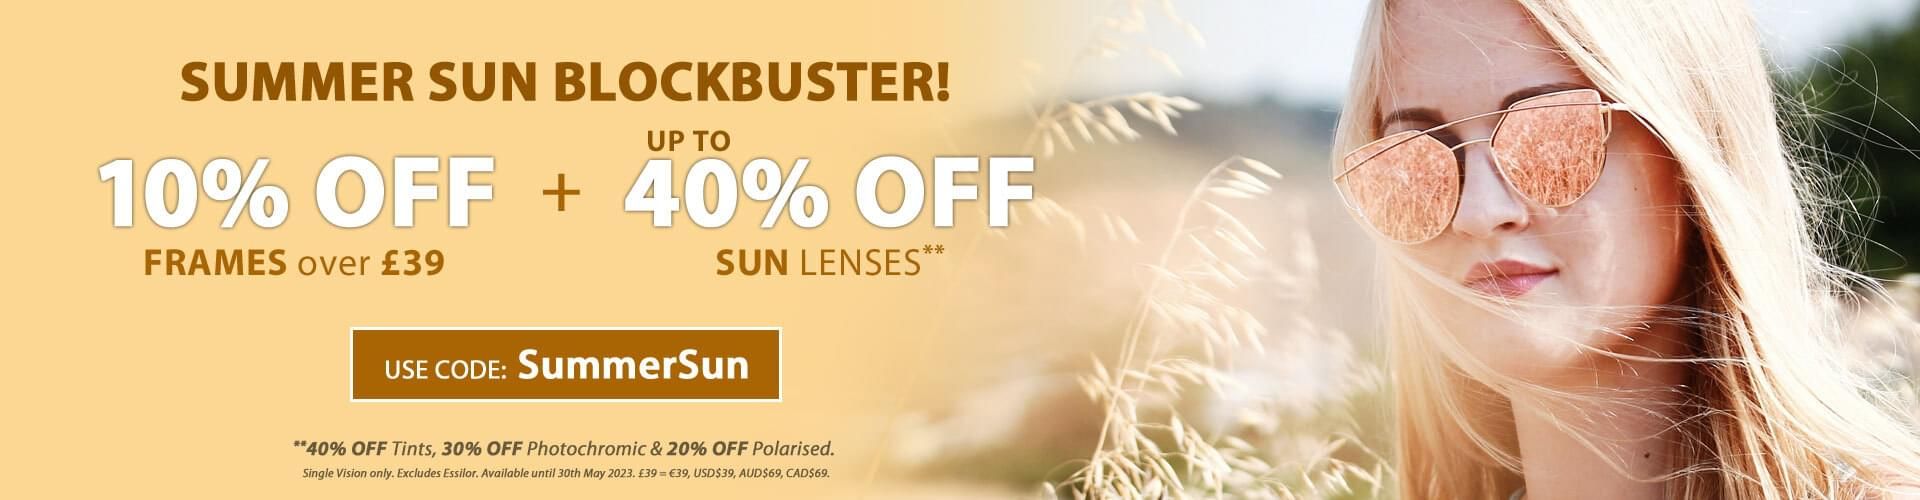 Summer Sun Blockbuster! - 10% OFF Frames £39+ & Up to 40% OFF Sun Lenses